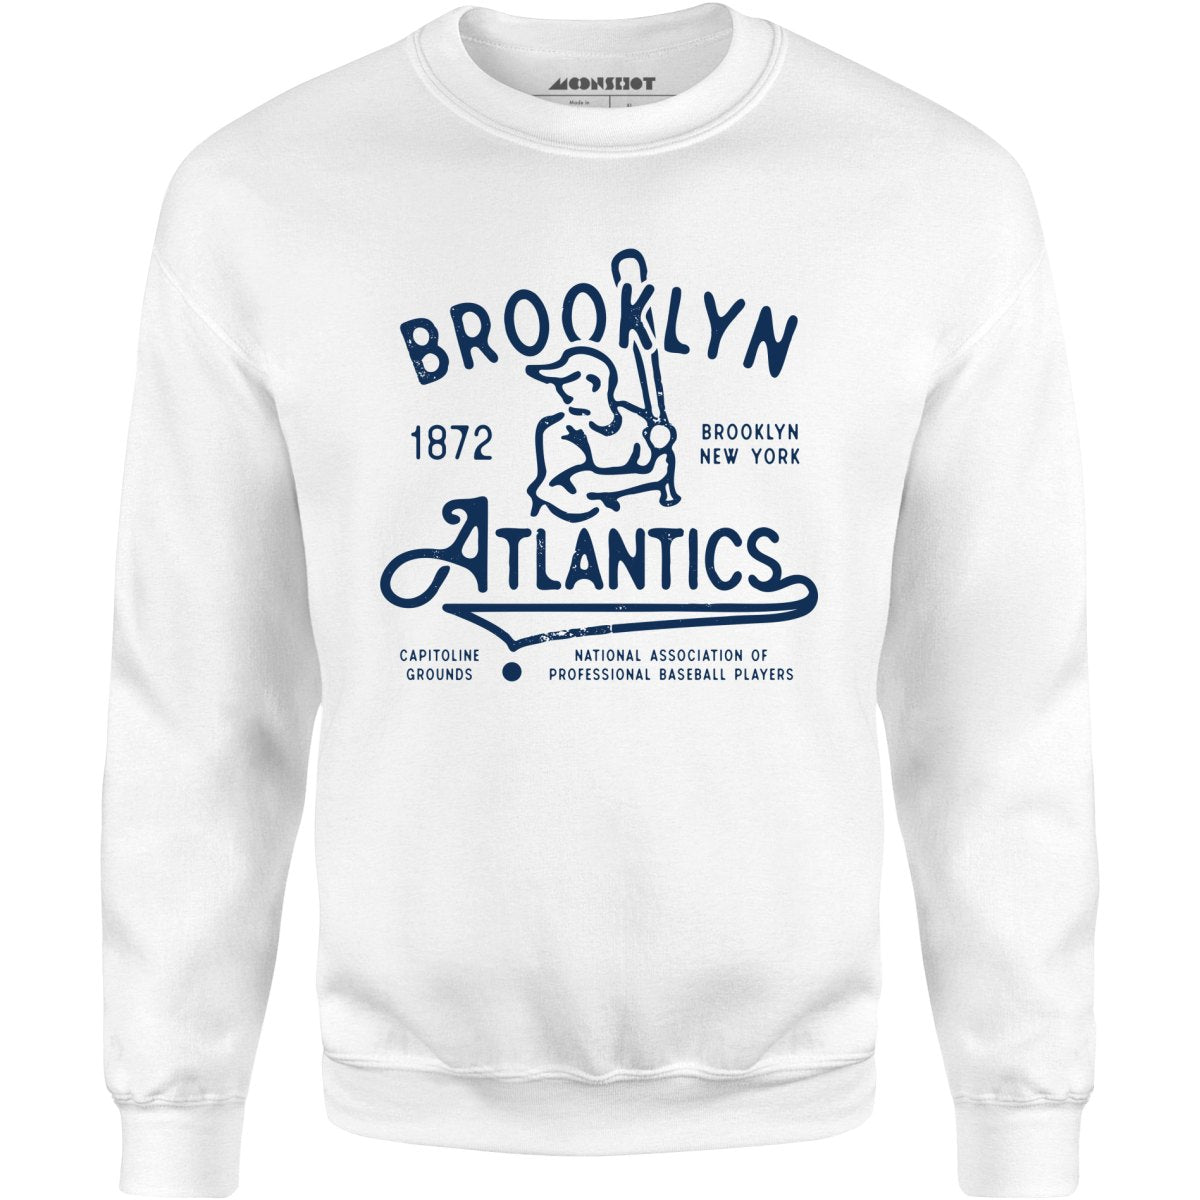 Brooklyn Atlantics - New York - Vintage Defunct Baseball Teams - Unisex Sweatshirt